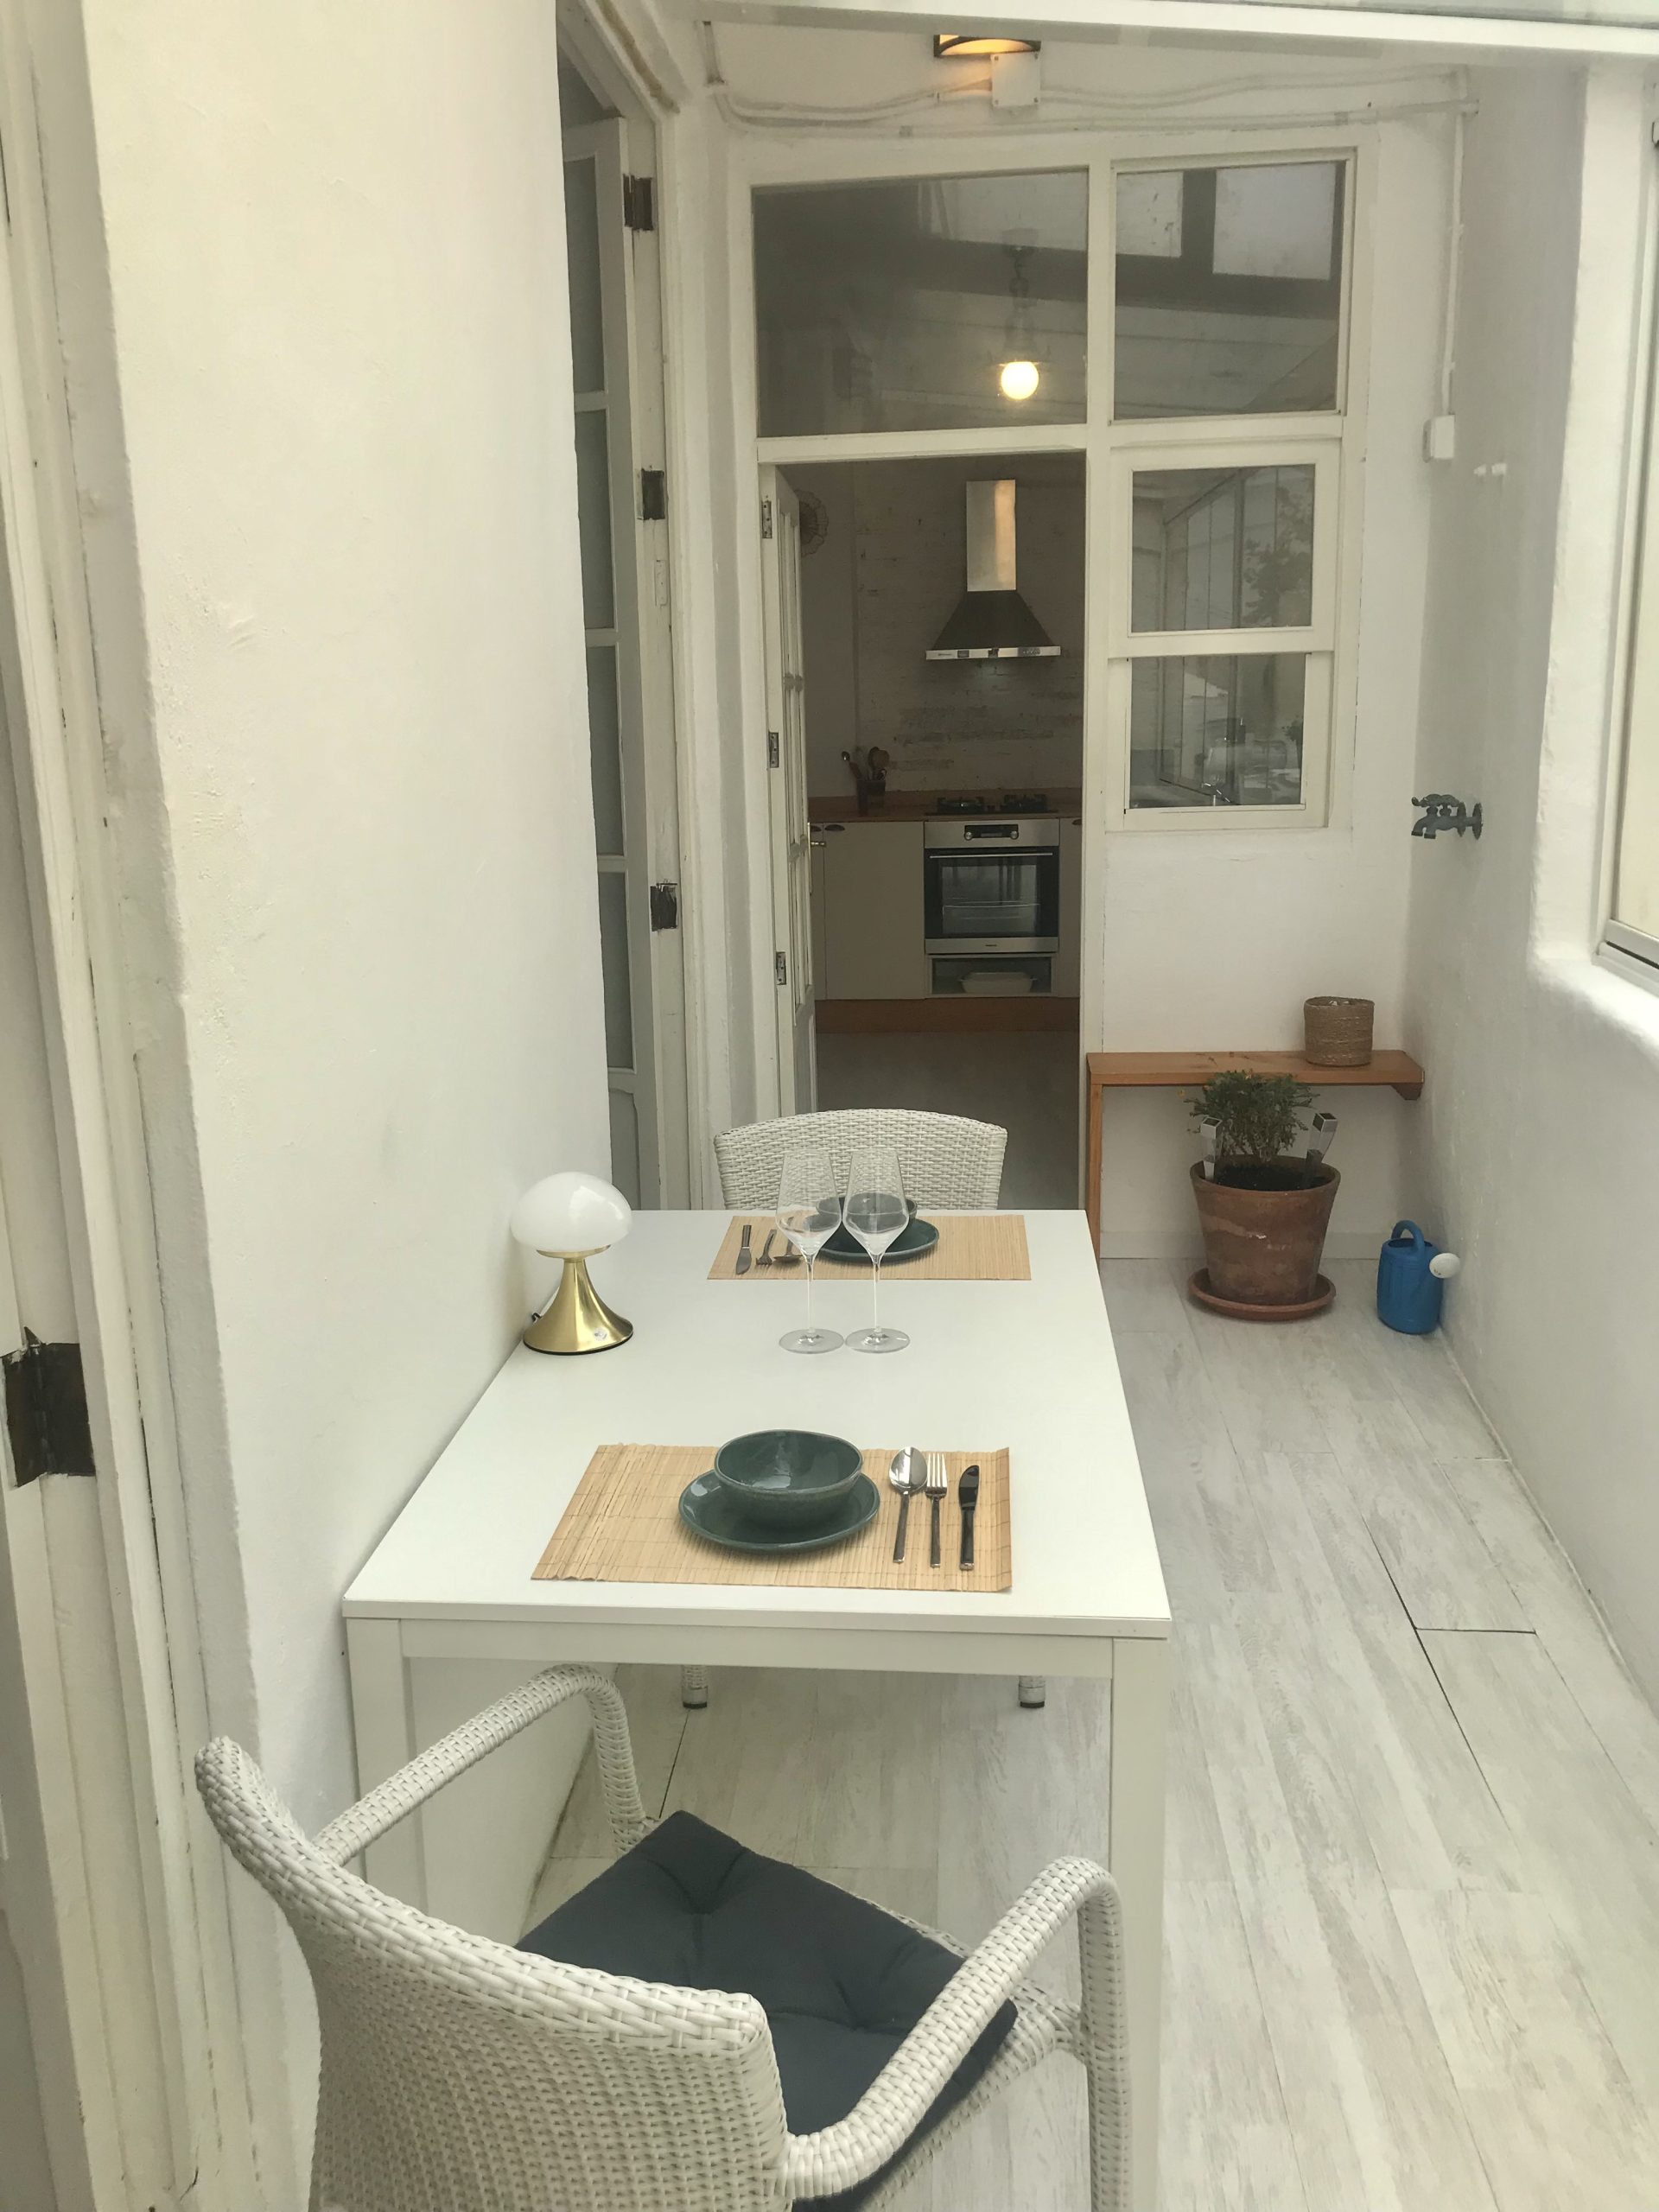 Eugenio - Exclusive apartment for rent in Valencia beach